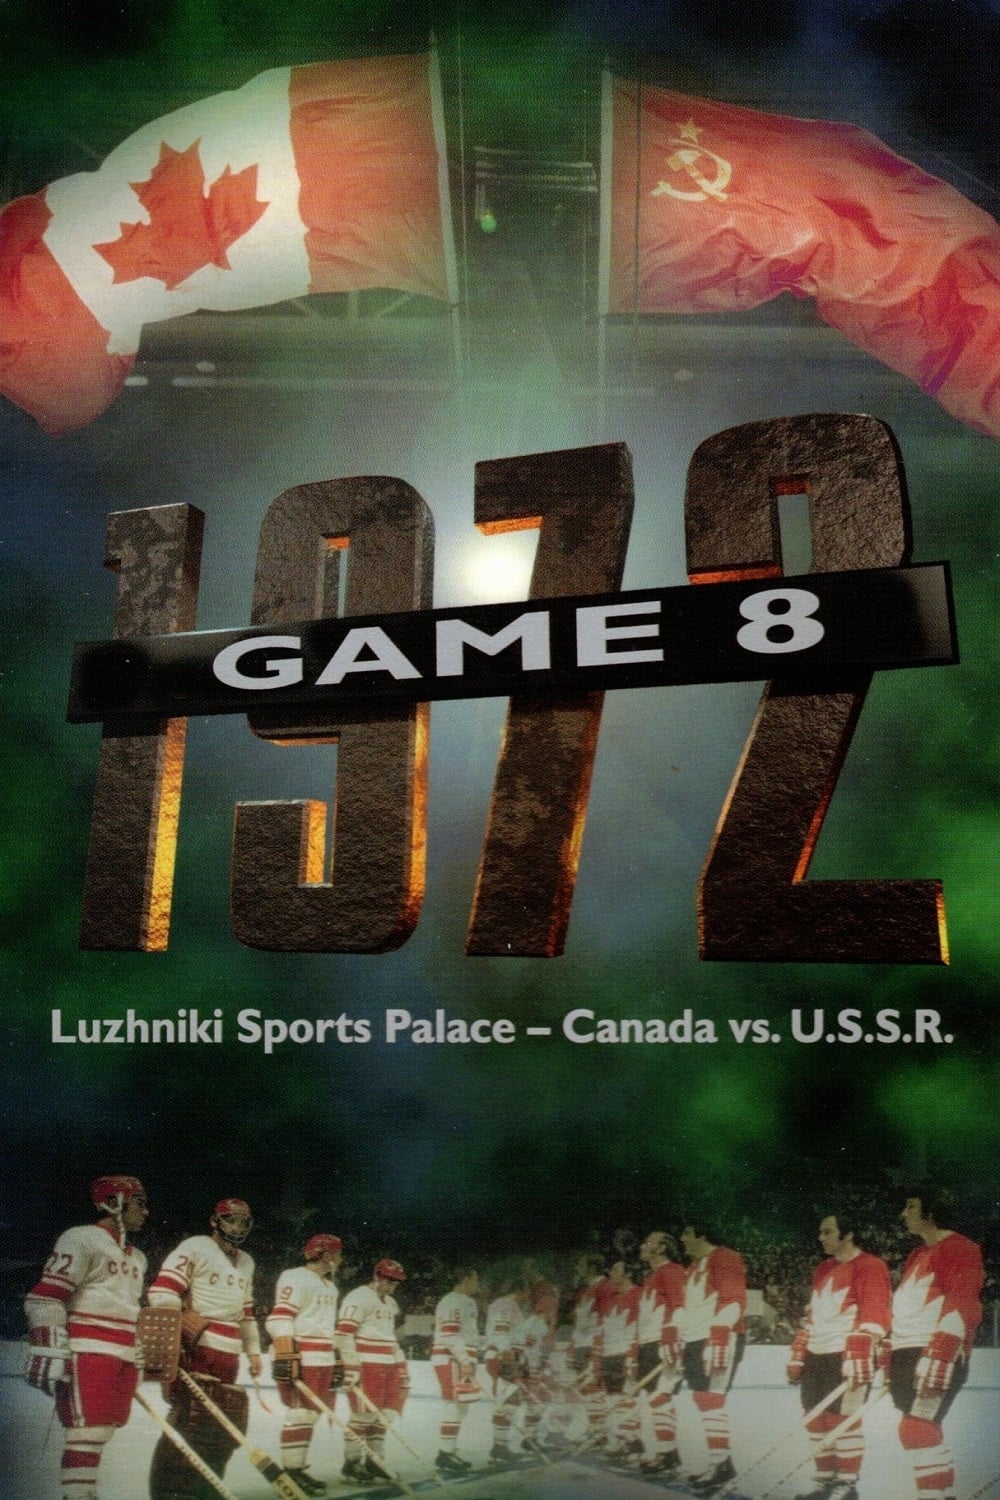 Game 8 - Canada vs. U.S.S.R.